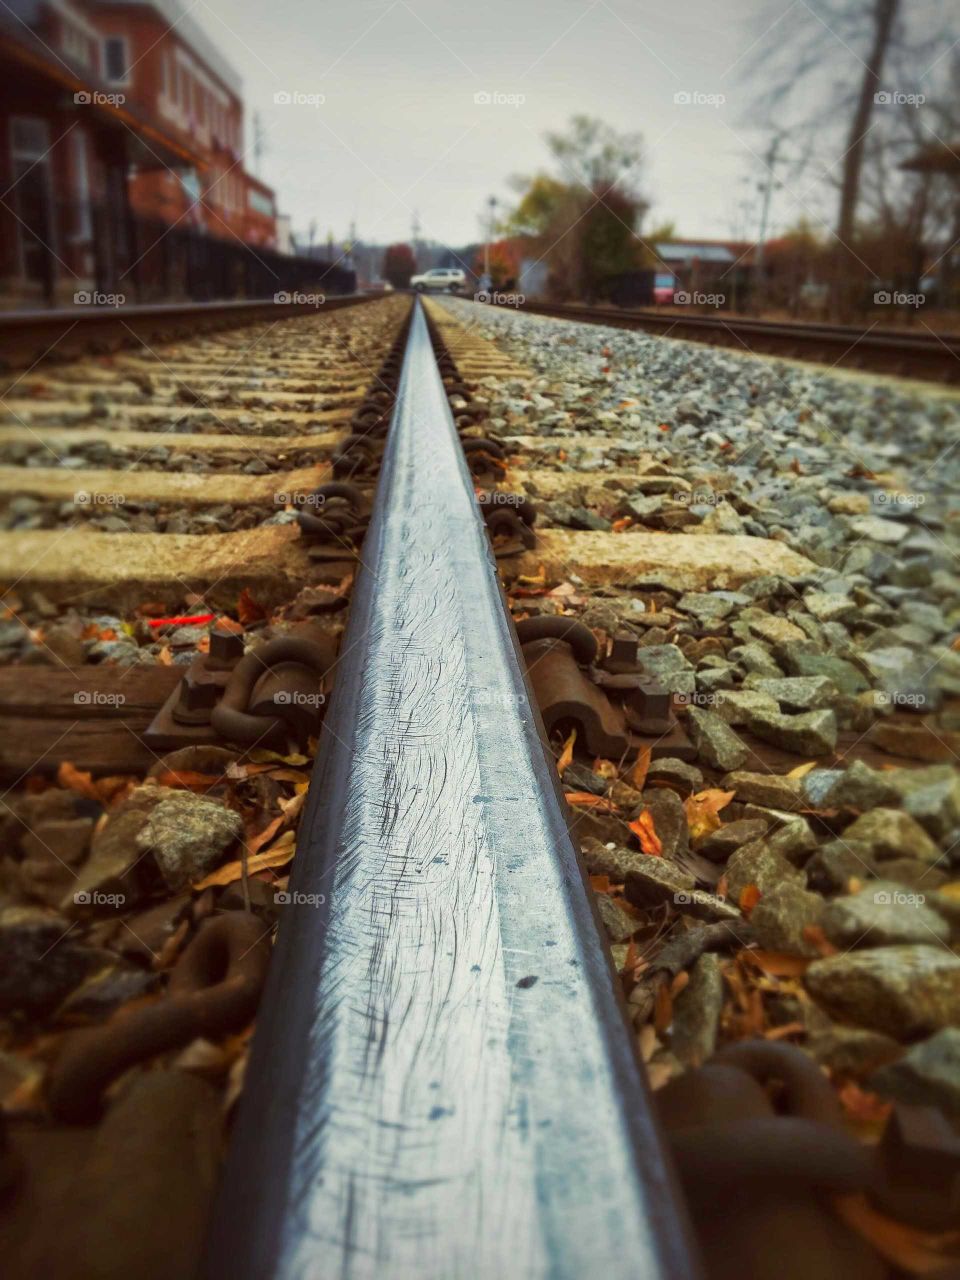 Rail, in detail